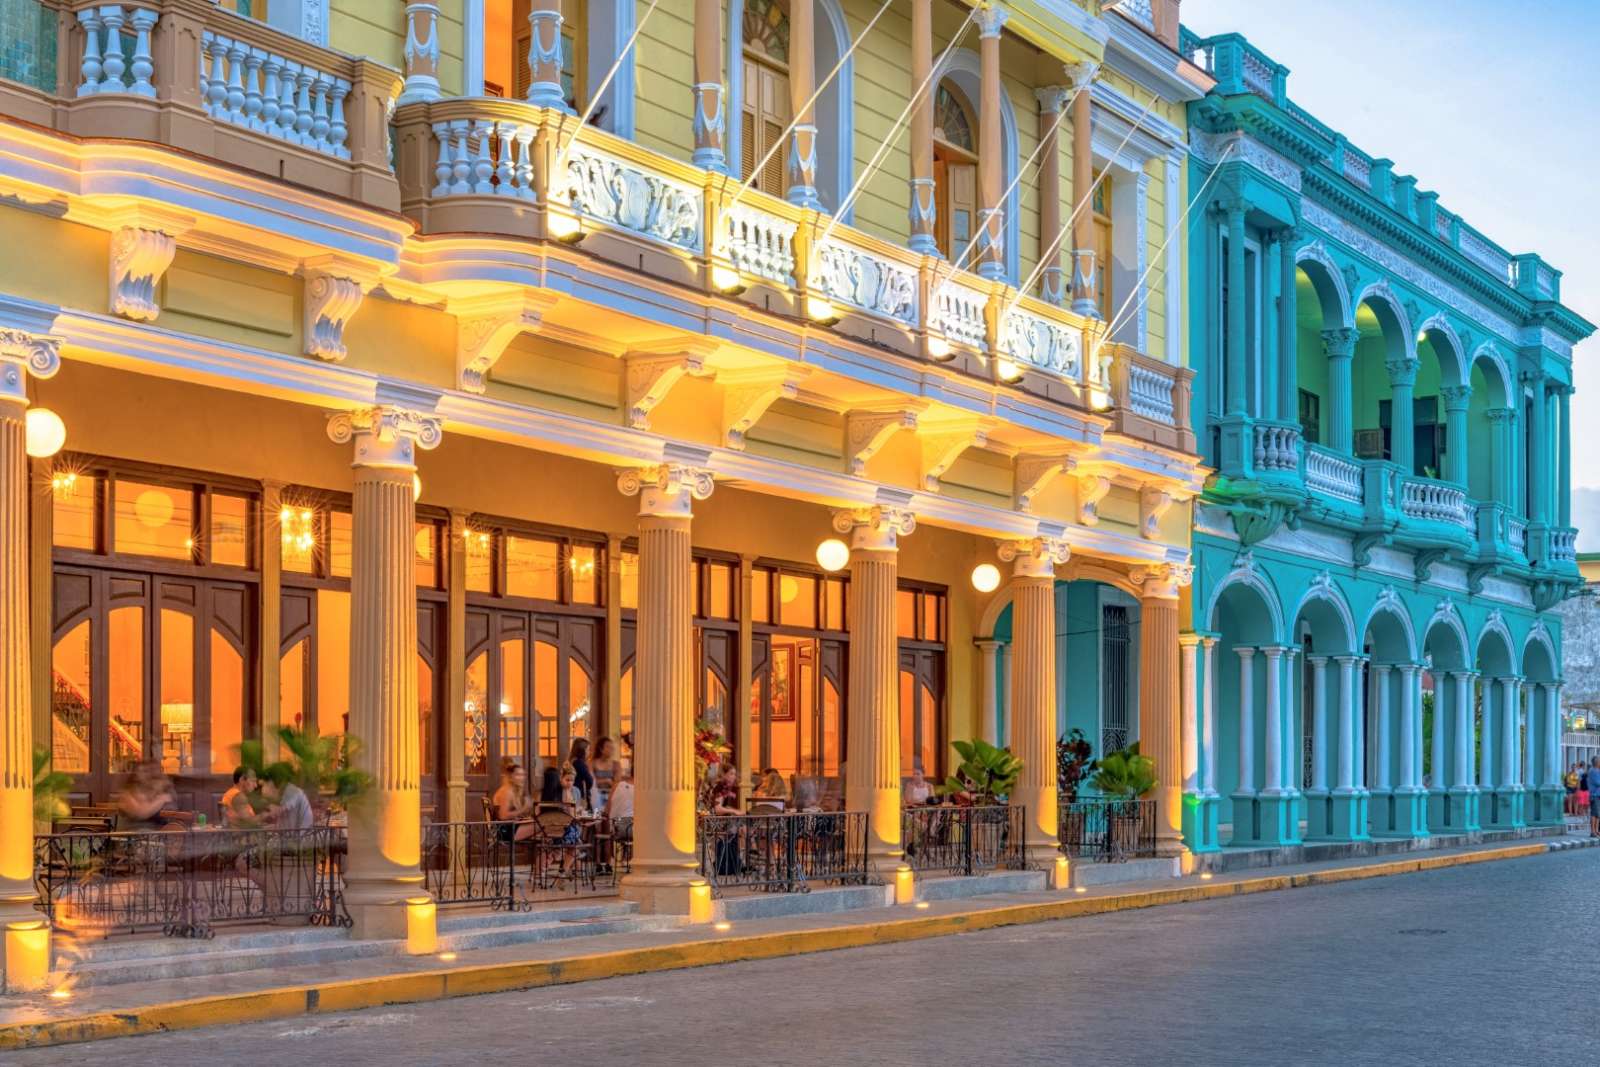 Hotel Central in Santa Clara, Cuba